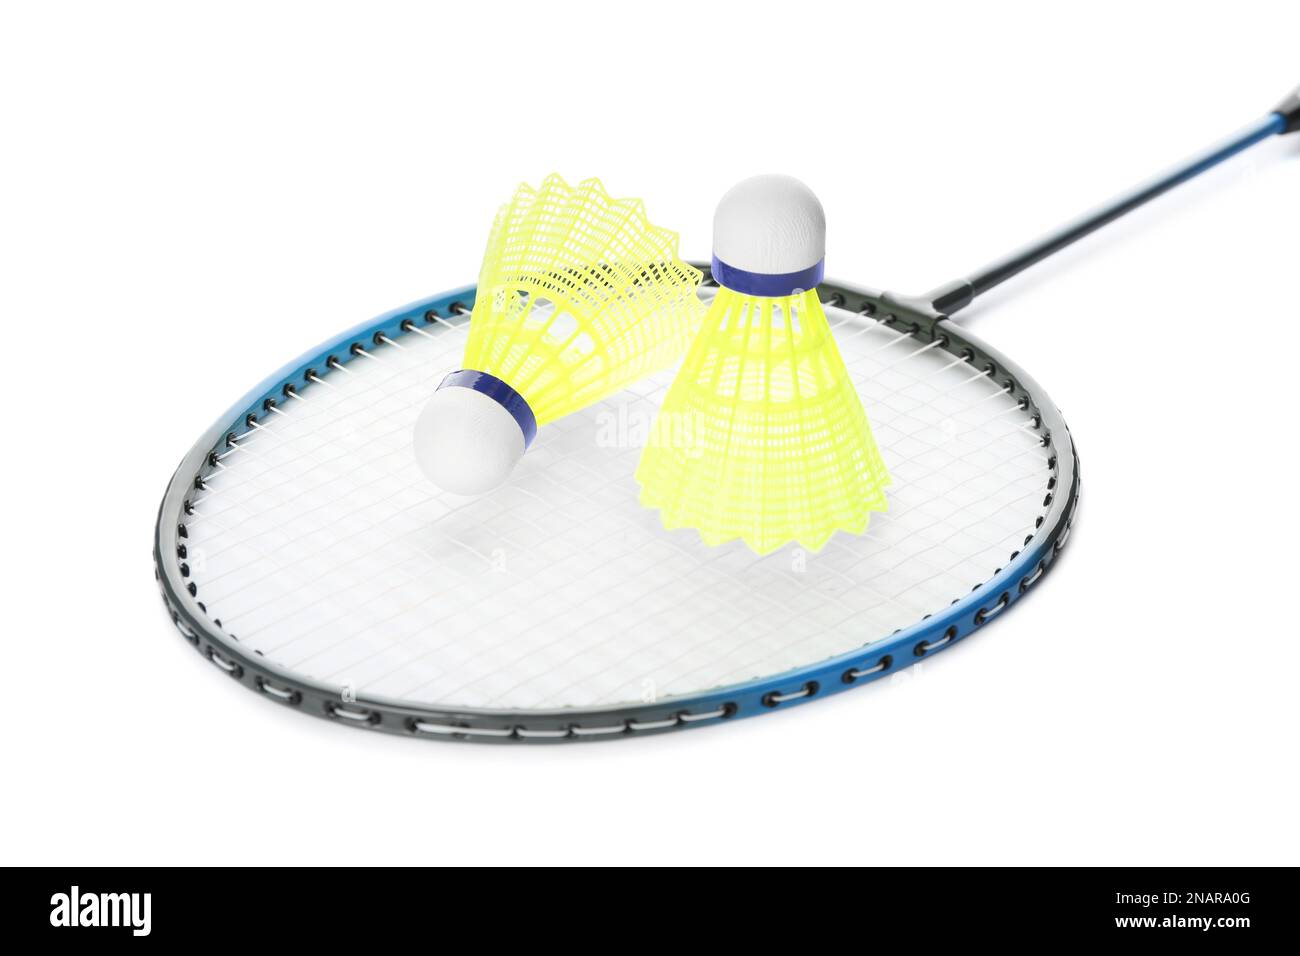 Badminton racket and shuttlecocks on white background Stock Photo